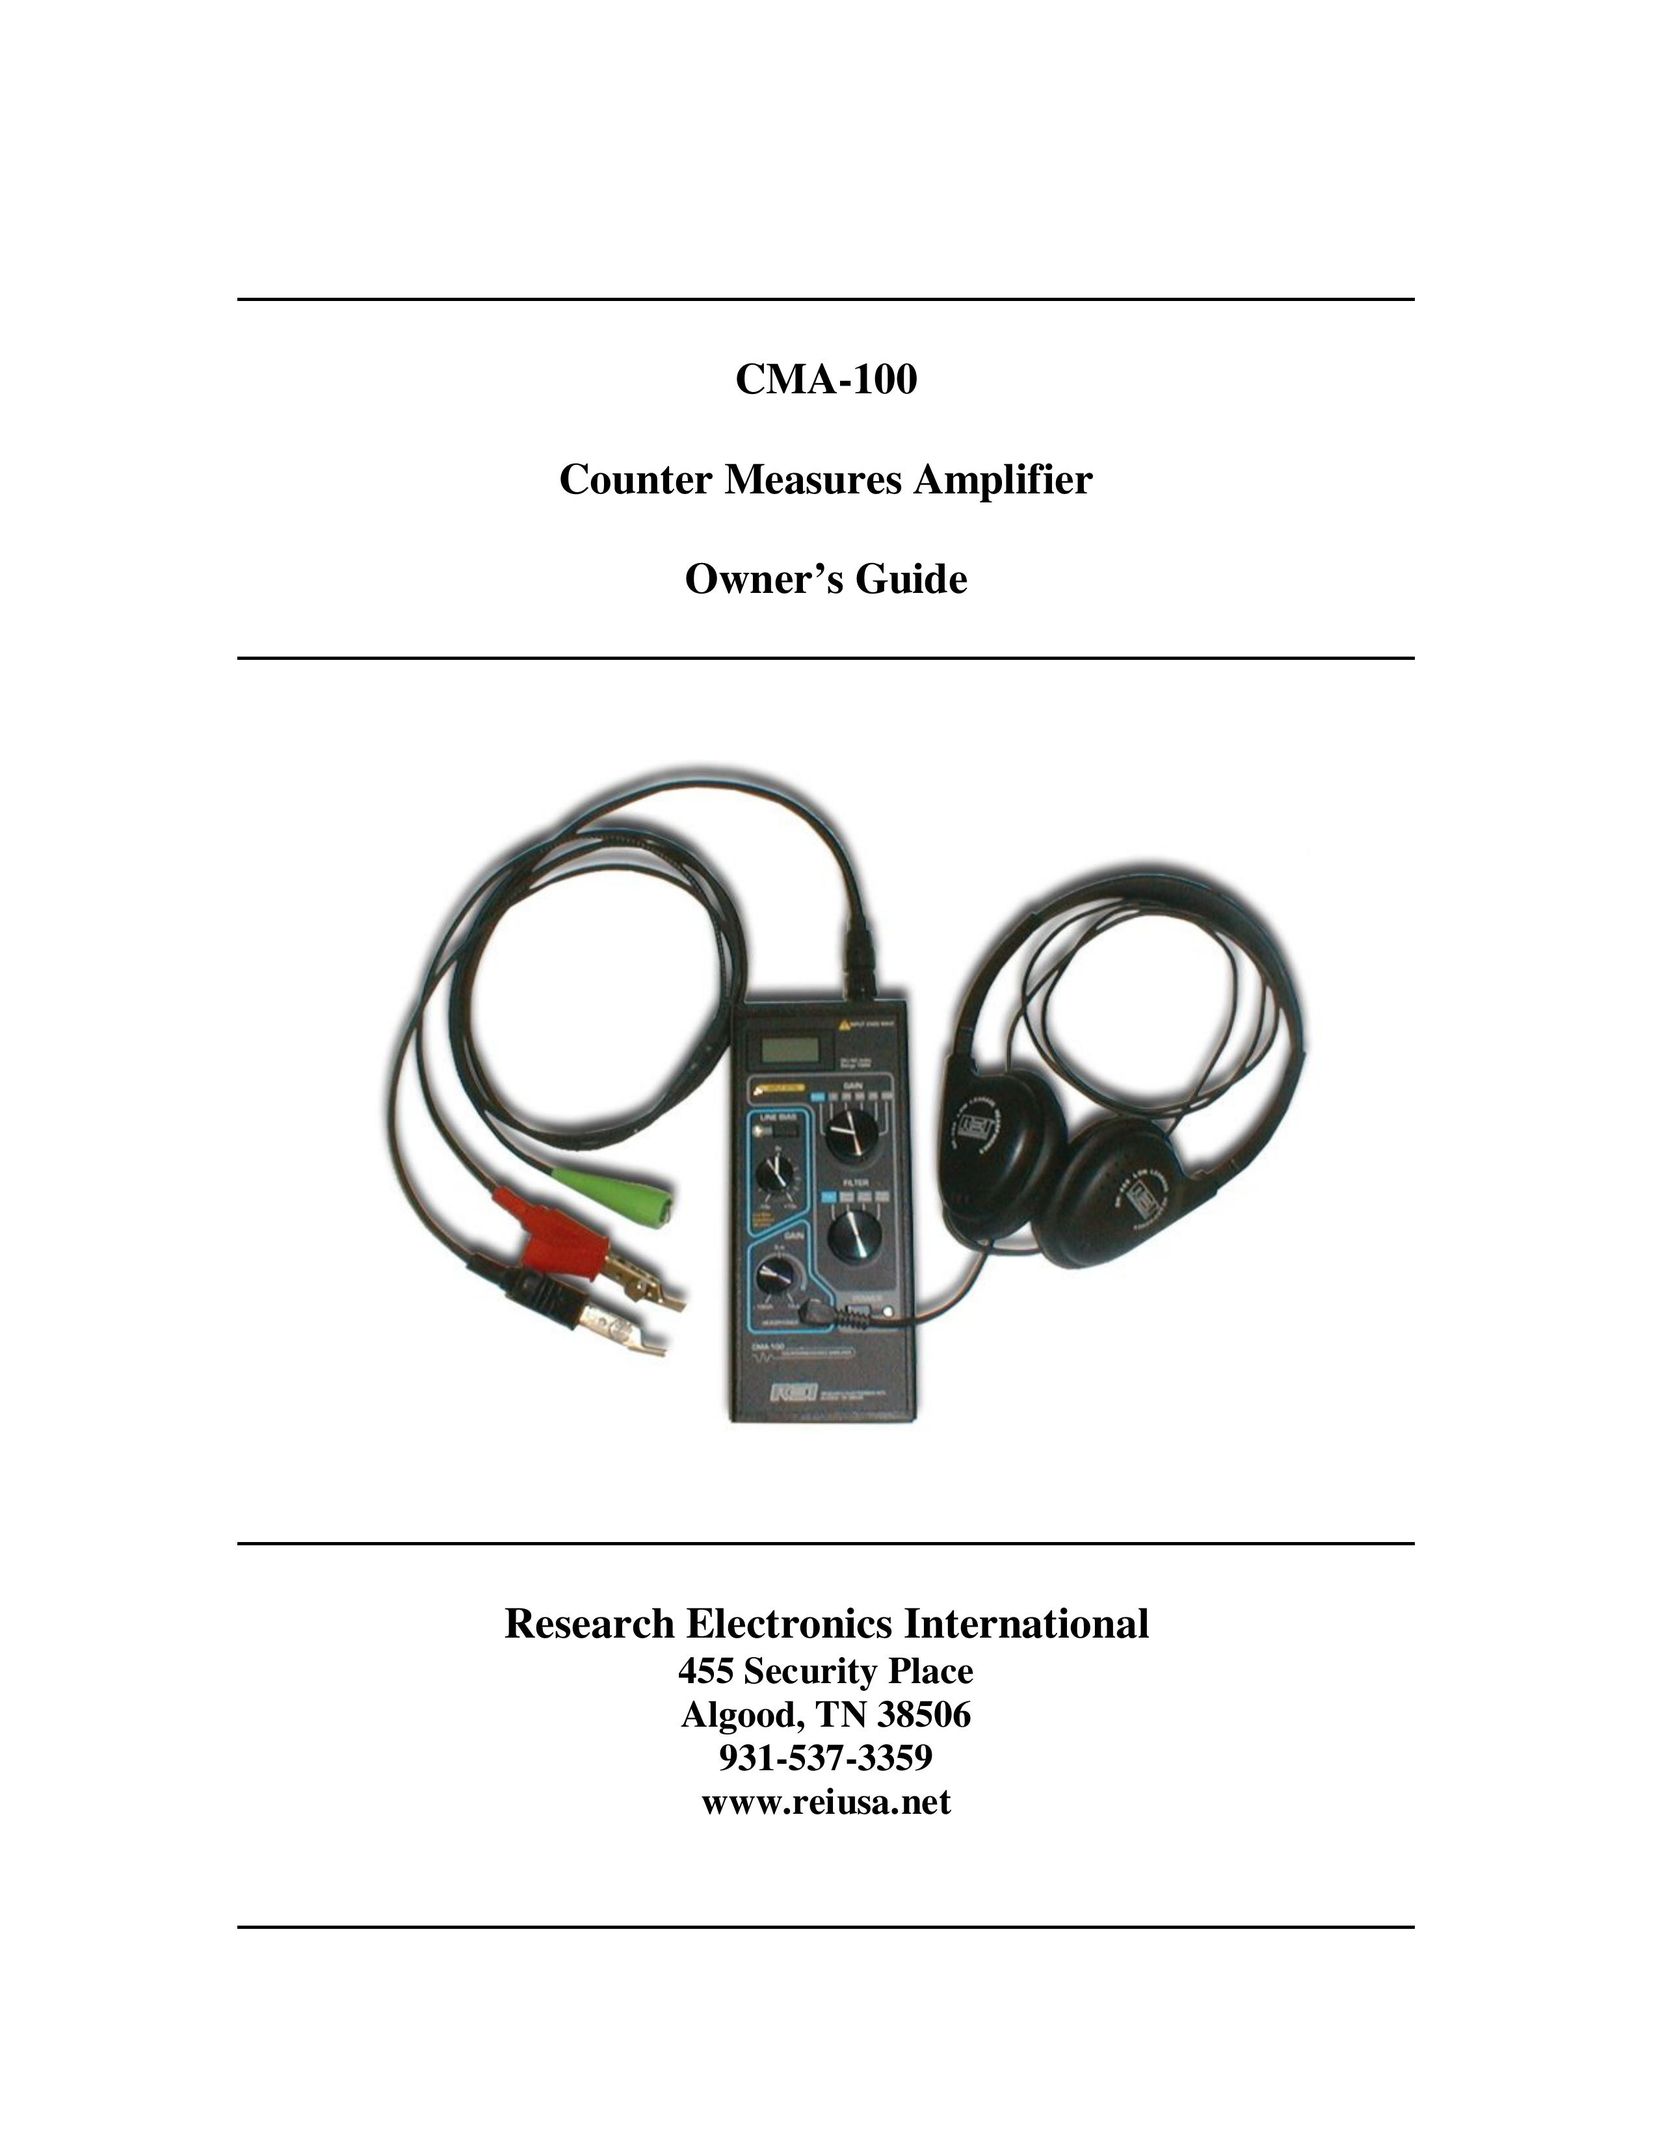 REI CMA-100 Stereo Amplifier User Manual